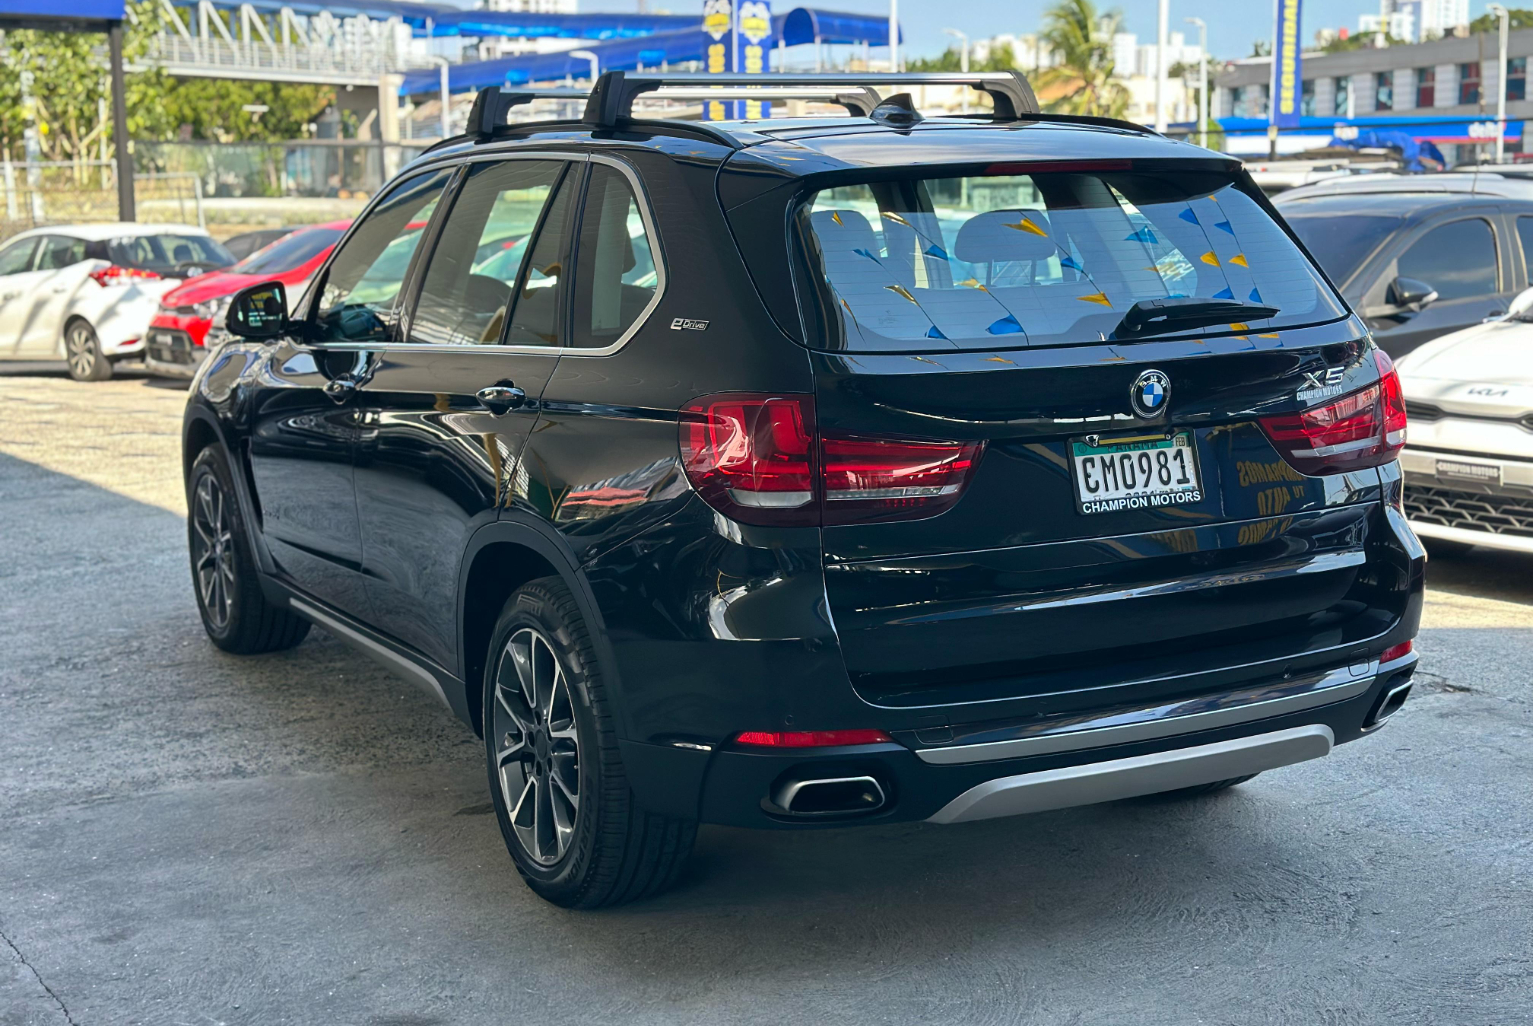 BMW X5 eDrive 2018 Automático color Negro, Imagen #6